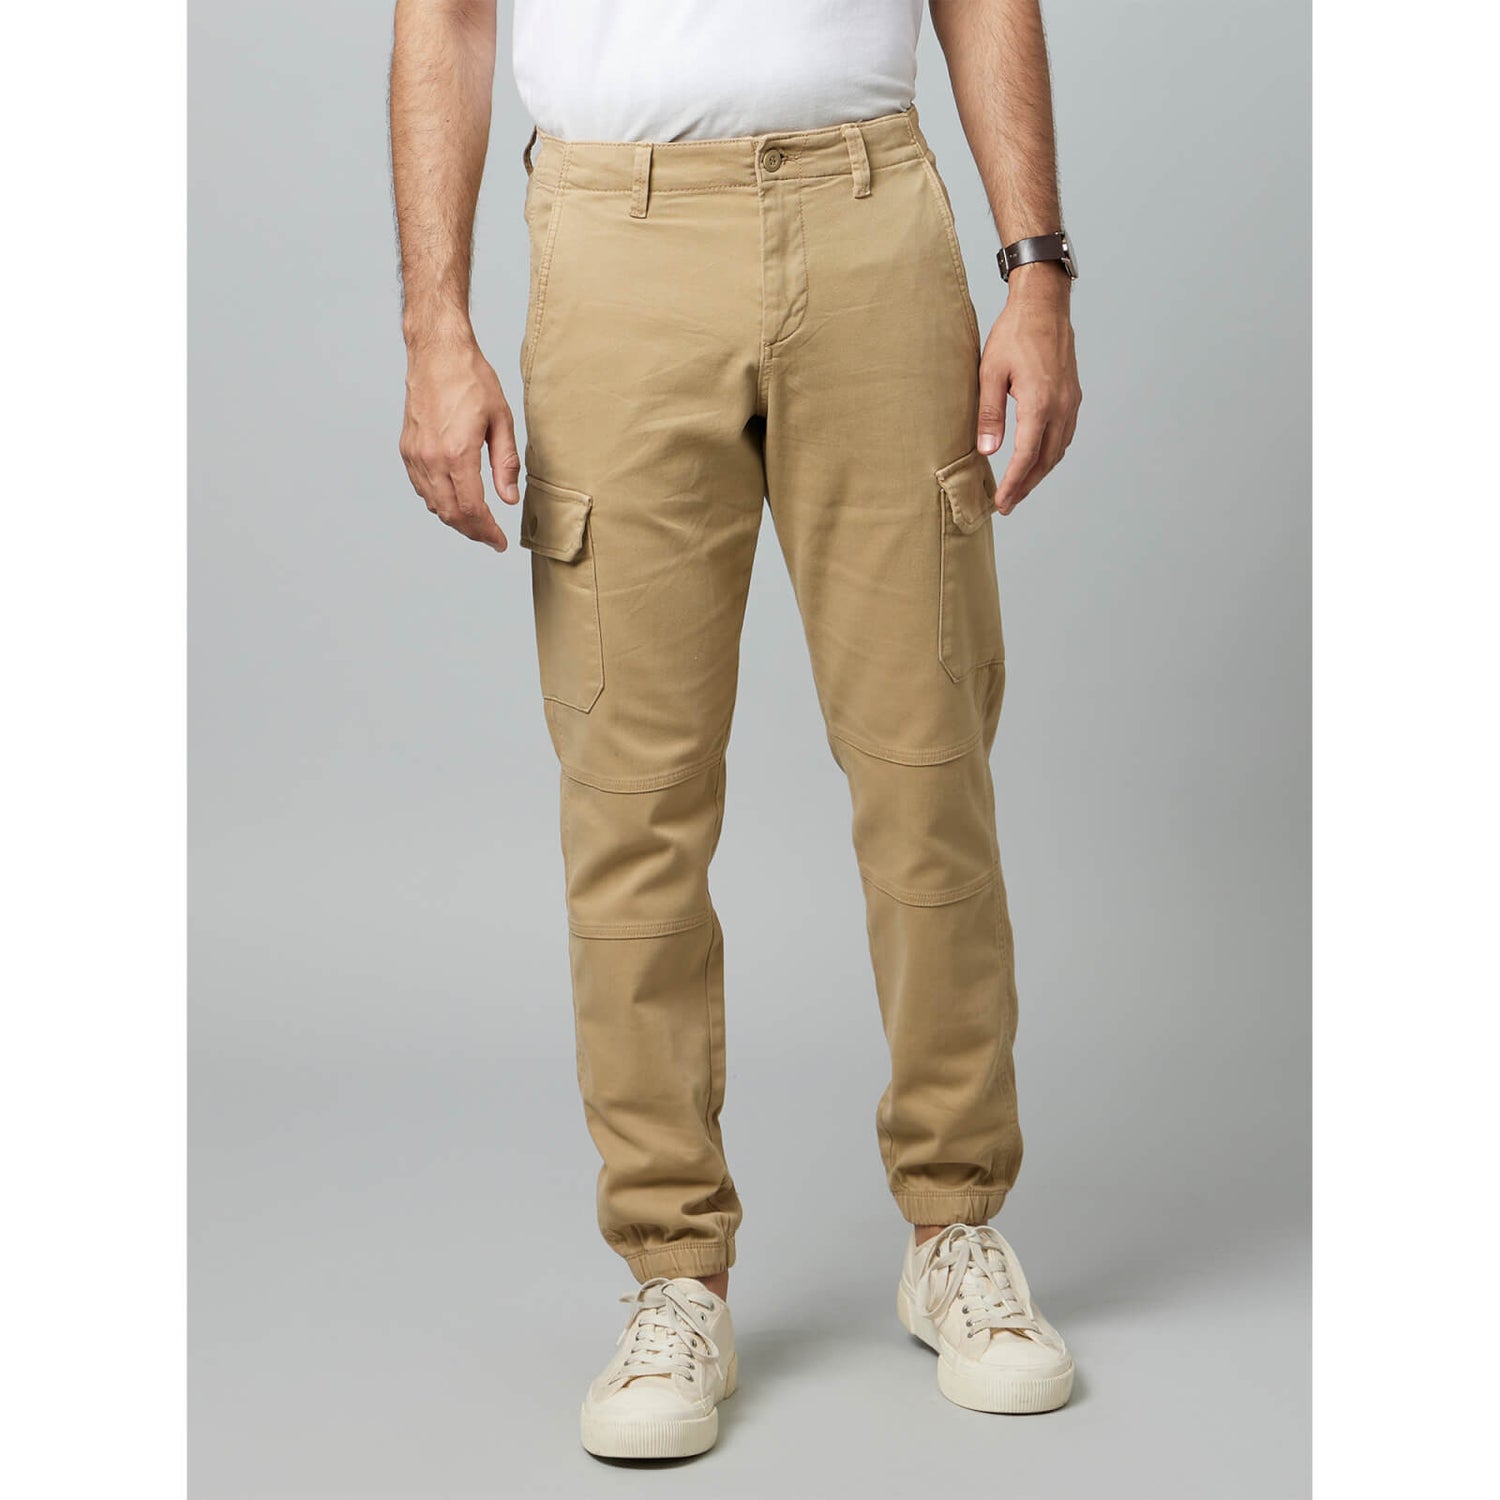 Cotton Cargo Pants IY312